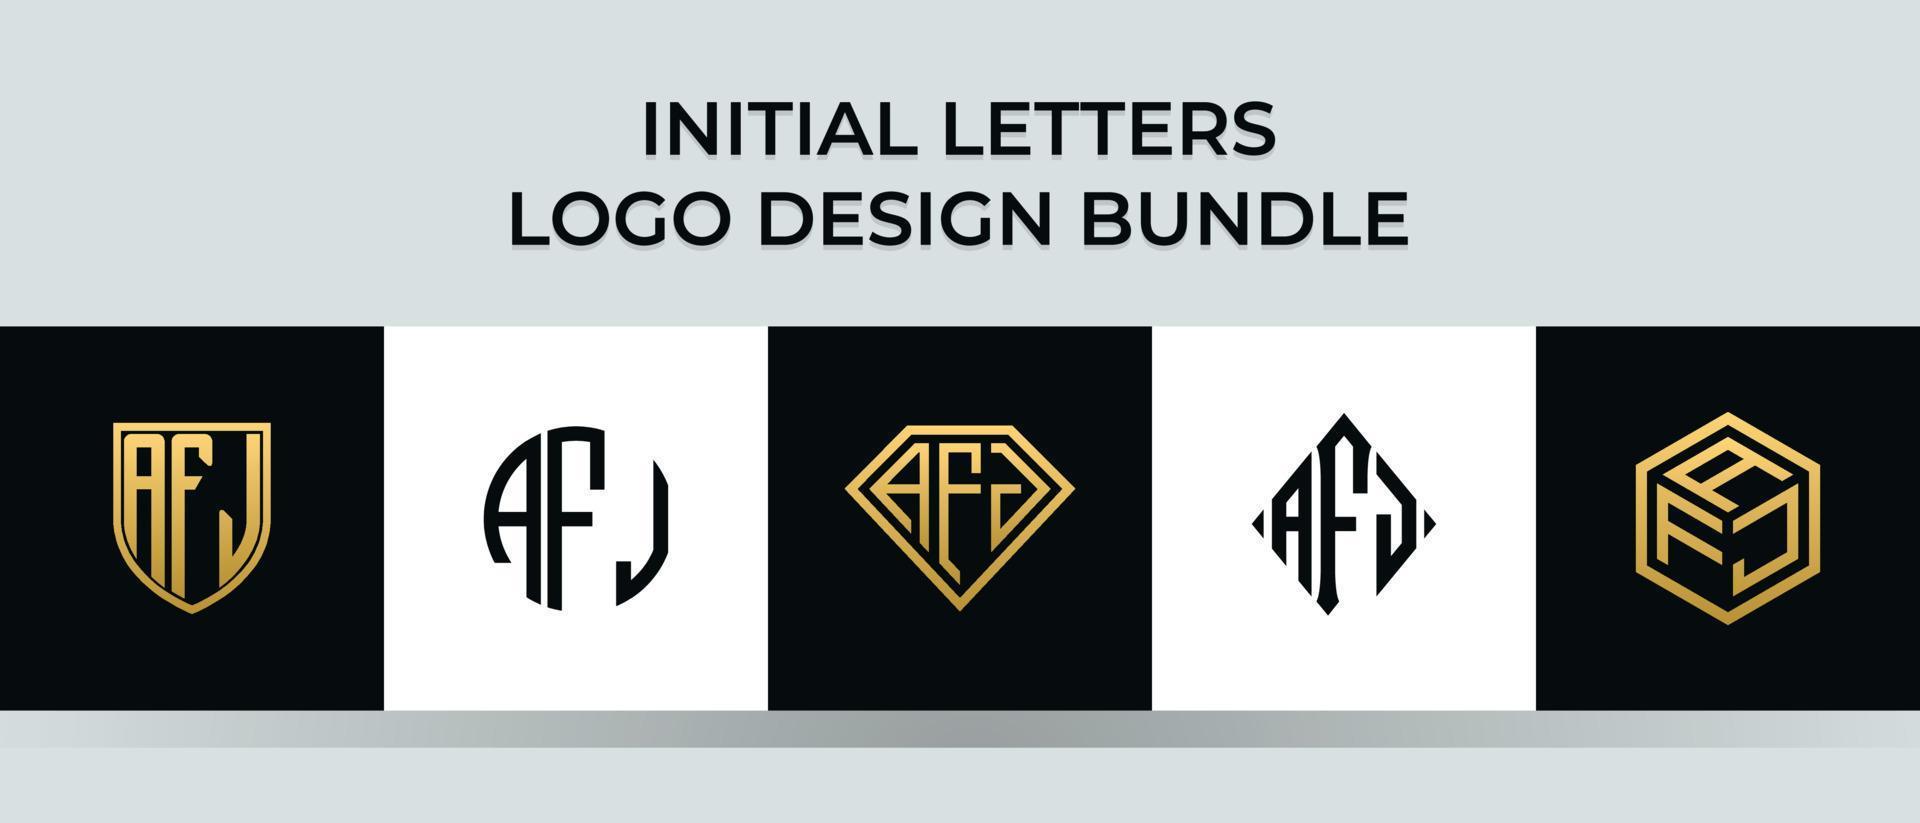 lettere iniziali afj logo design bundle vettore